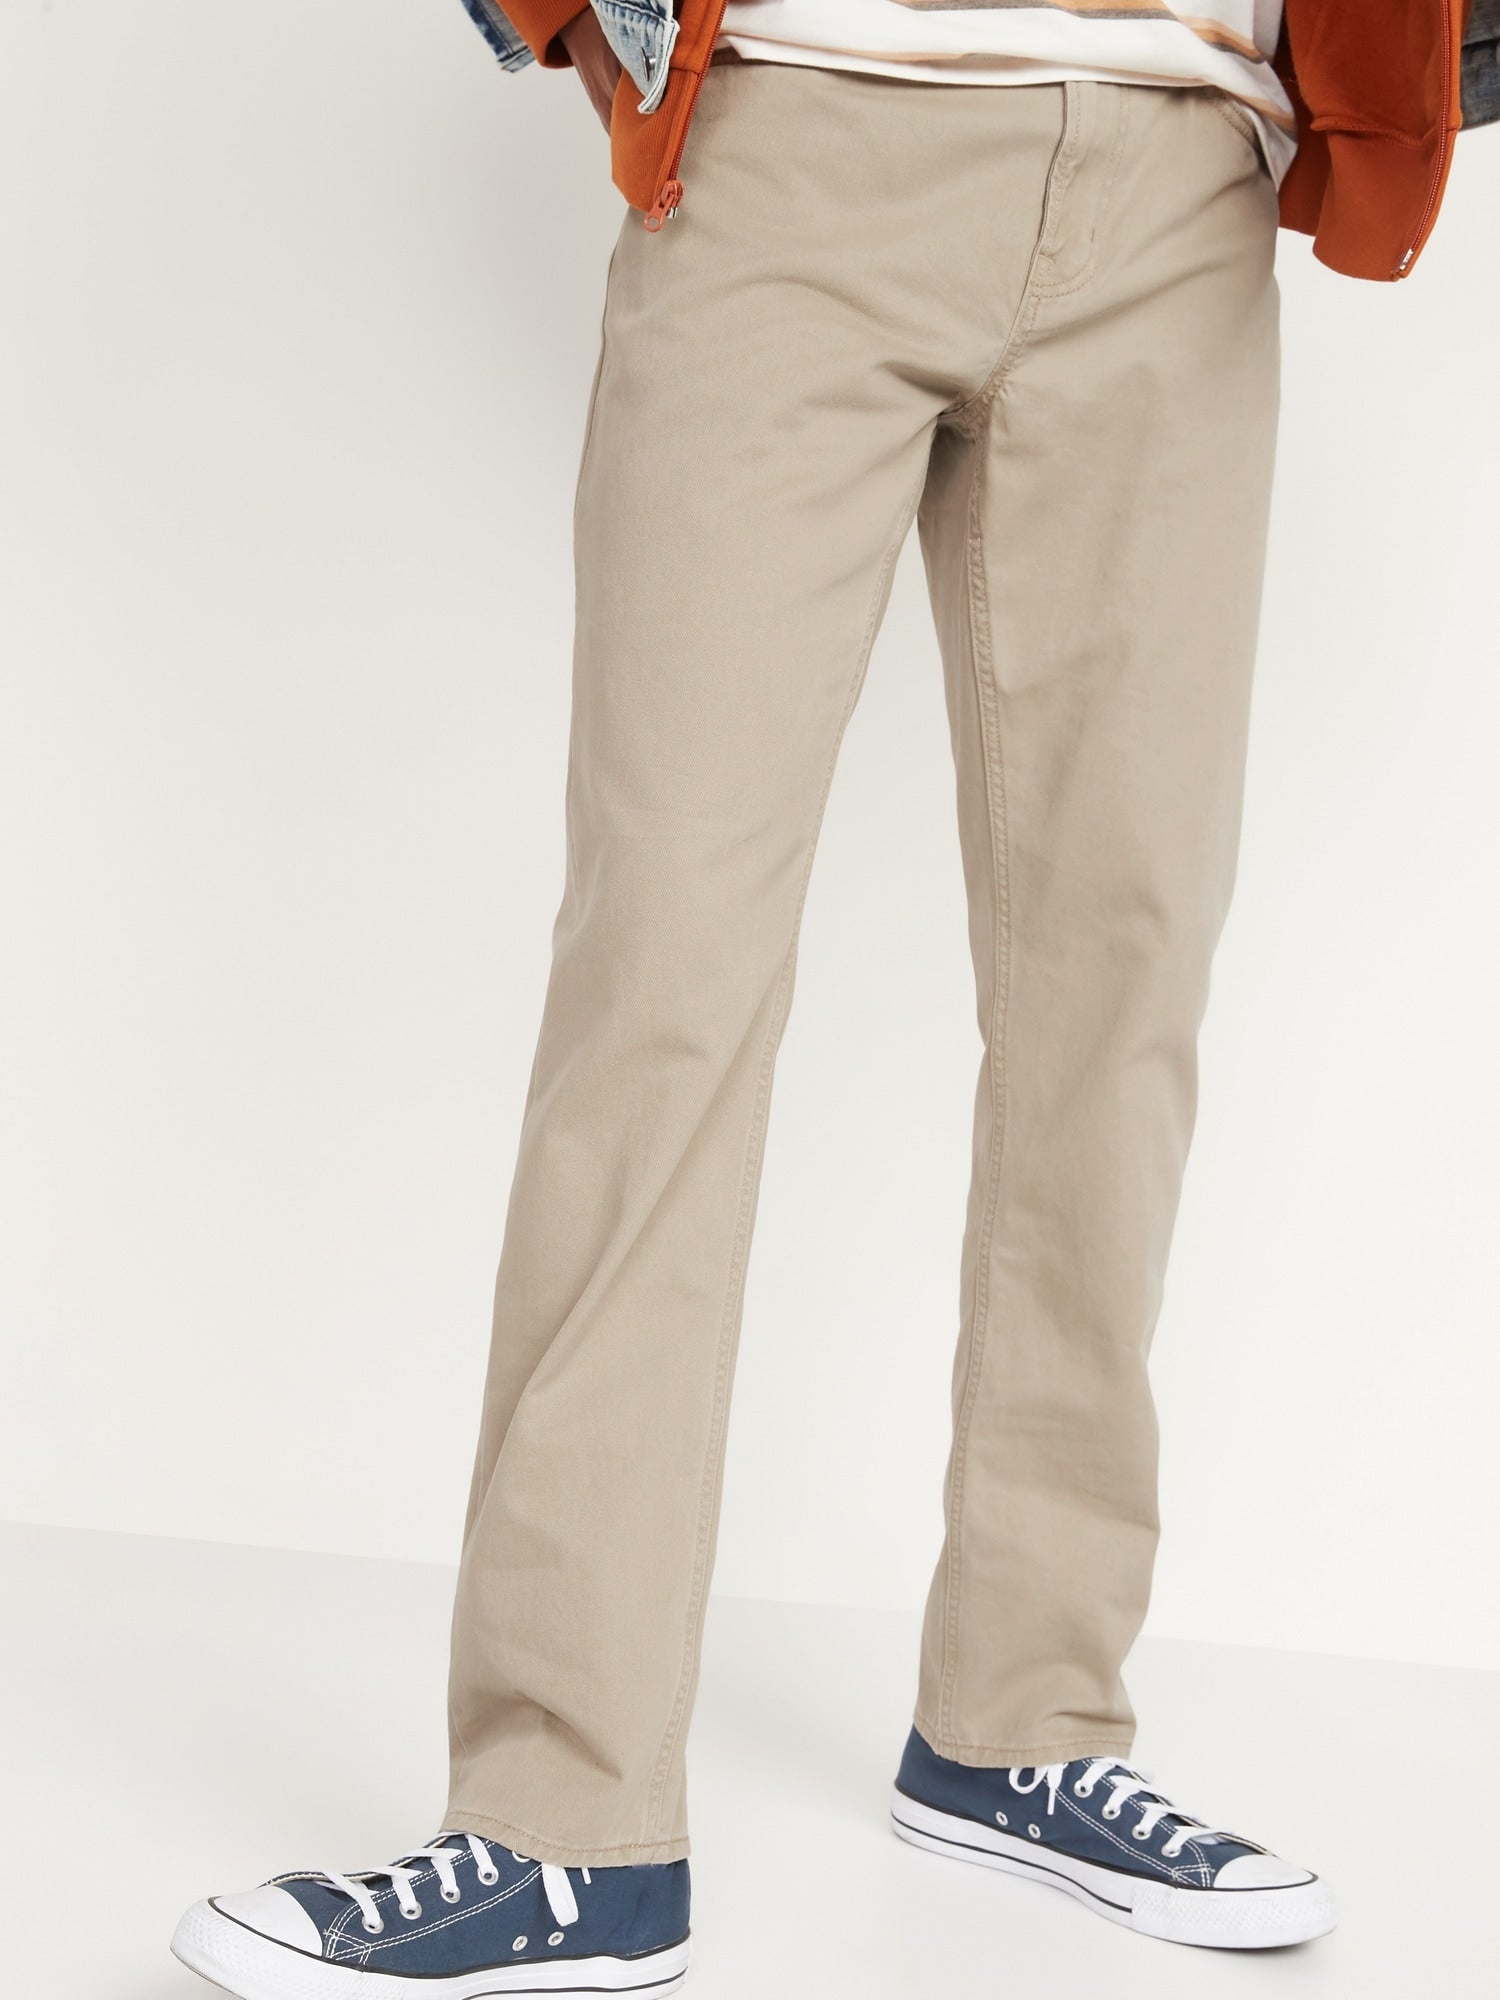 Old Navy- Wow Straight Five-Pocket Pants for Men (Surplus Khaki) – Amreki